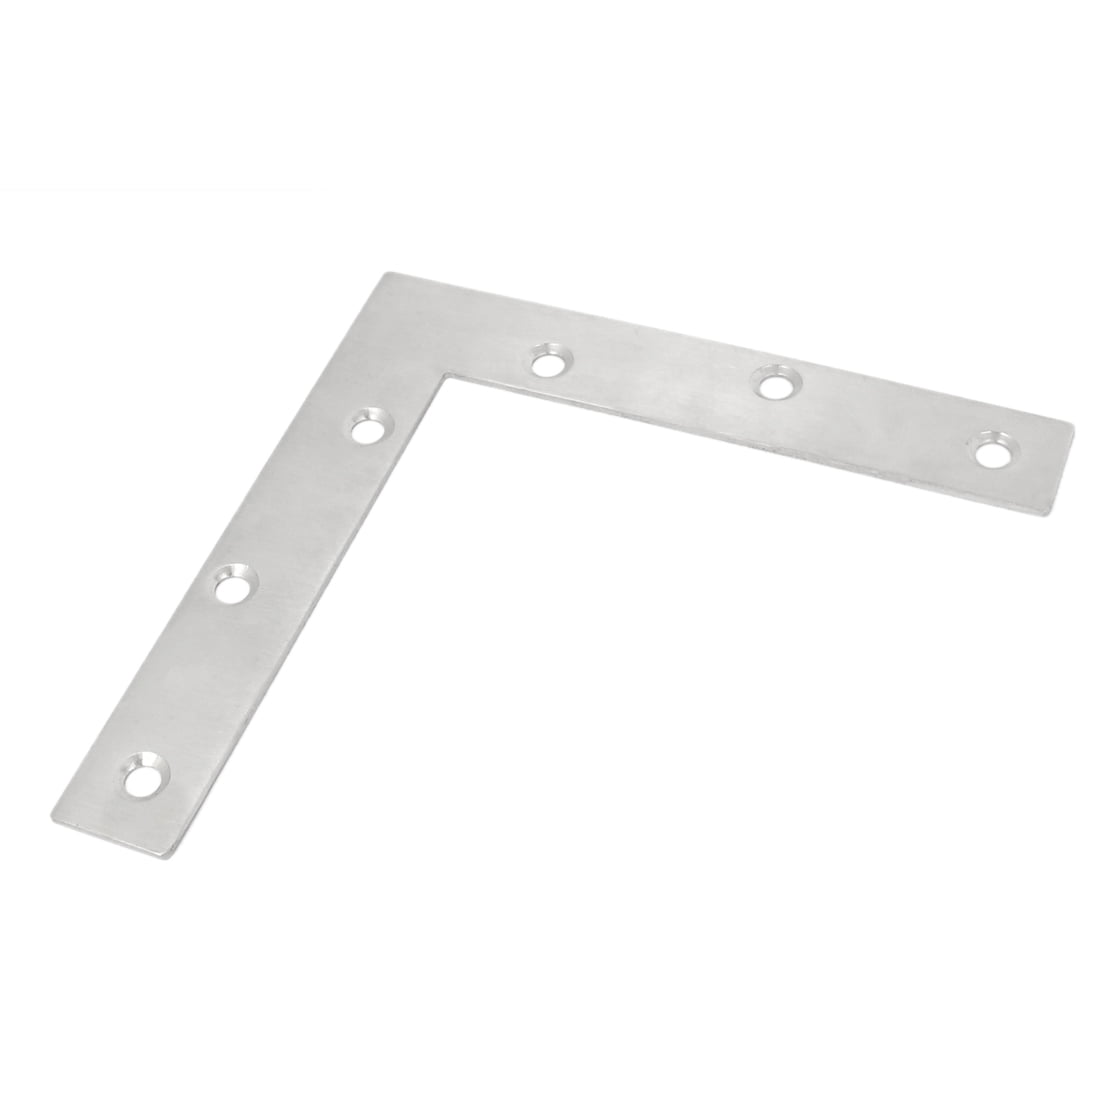 100x100x20mm 90 Degree Small/Large Steel Right Angle Metal L Shaped Bracket Corner Brace Fixing Shelf Support Repair x2